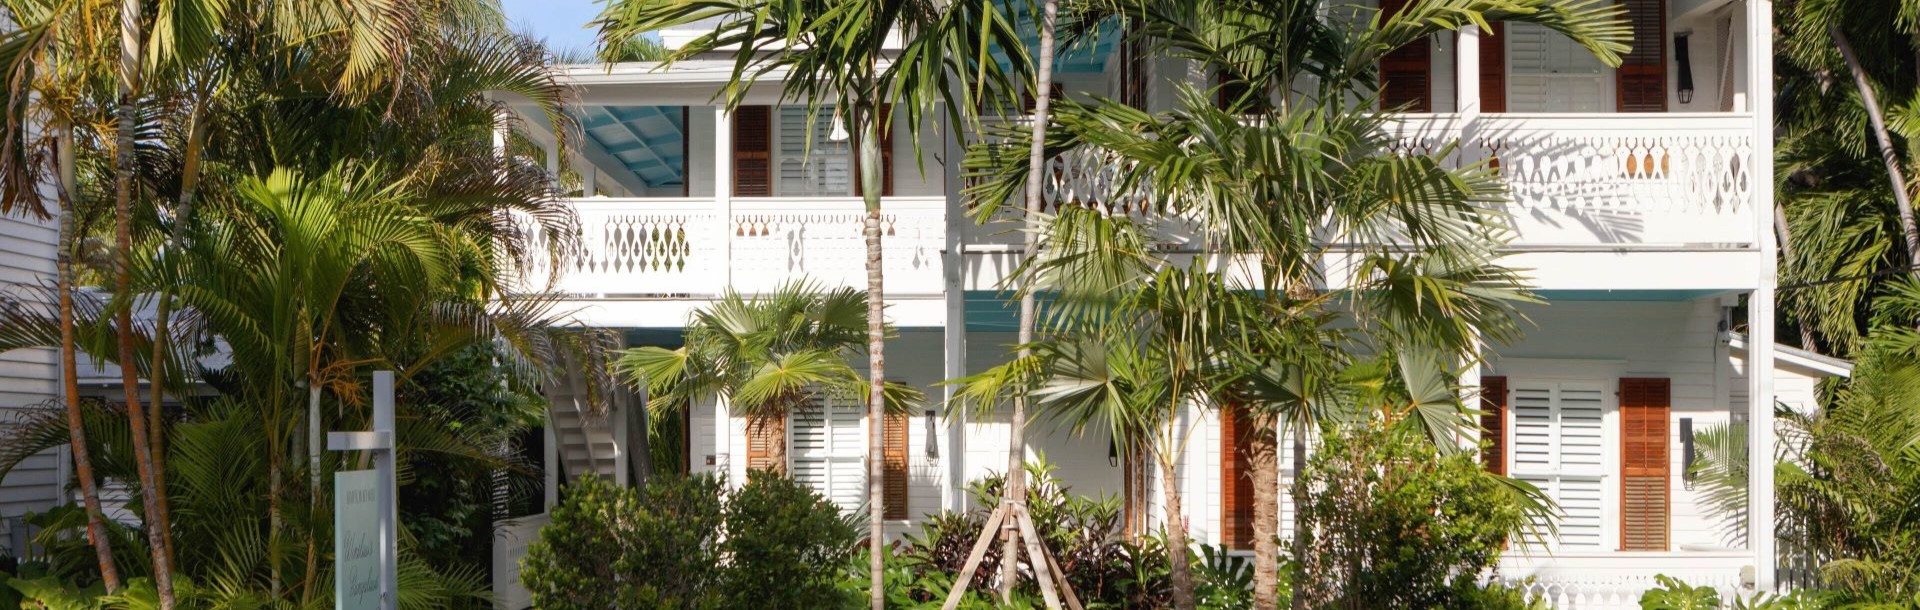 Winslow's Bungalows - Key West Historic Inns